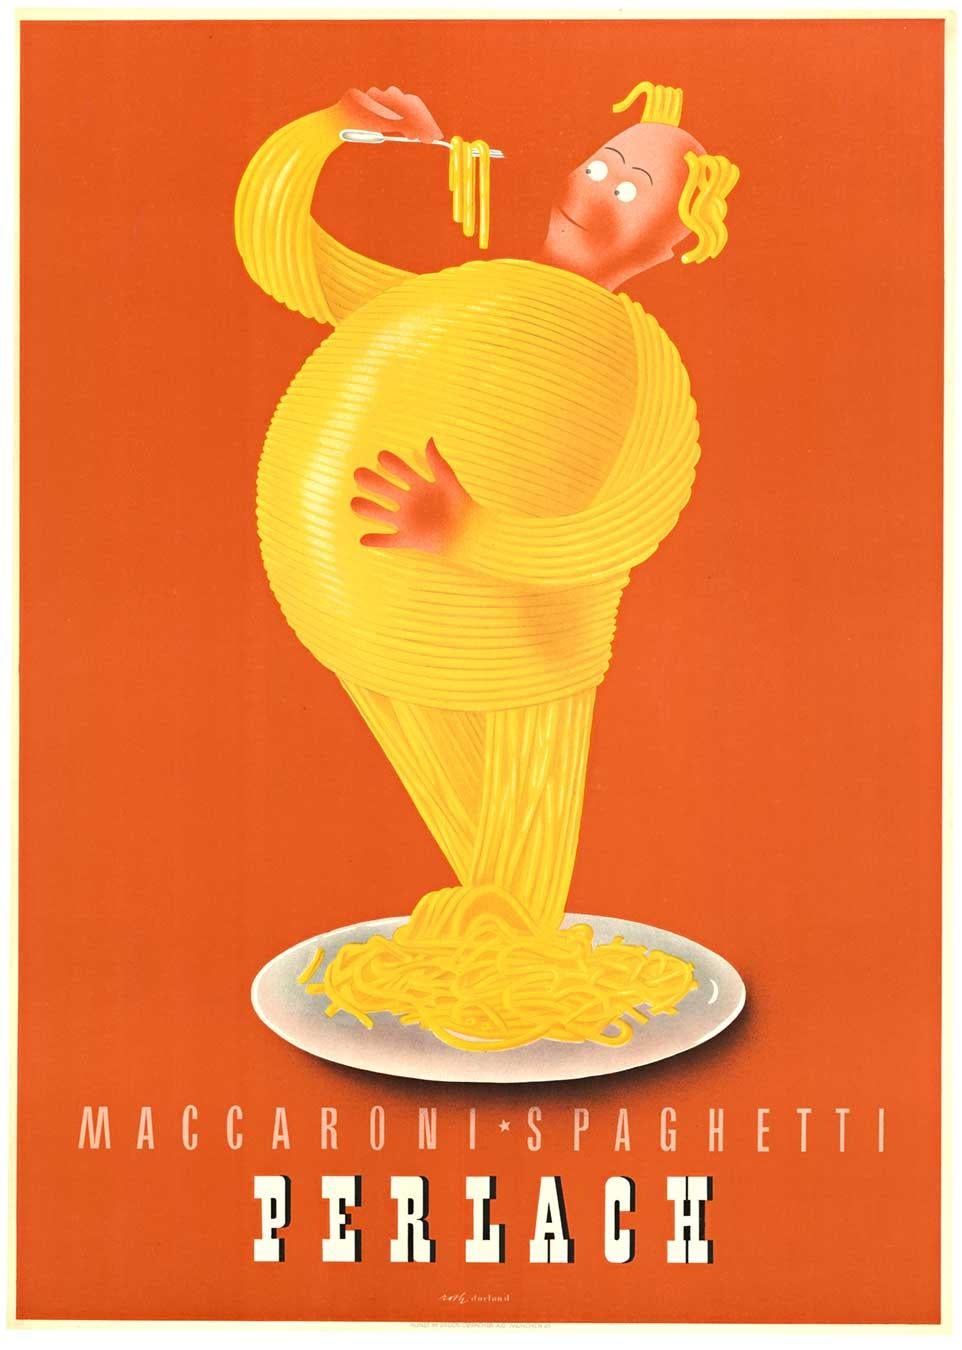 Richard Roth Print - Original Perlach Maccaroni - Spaghetti vintage poster  pasta